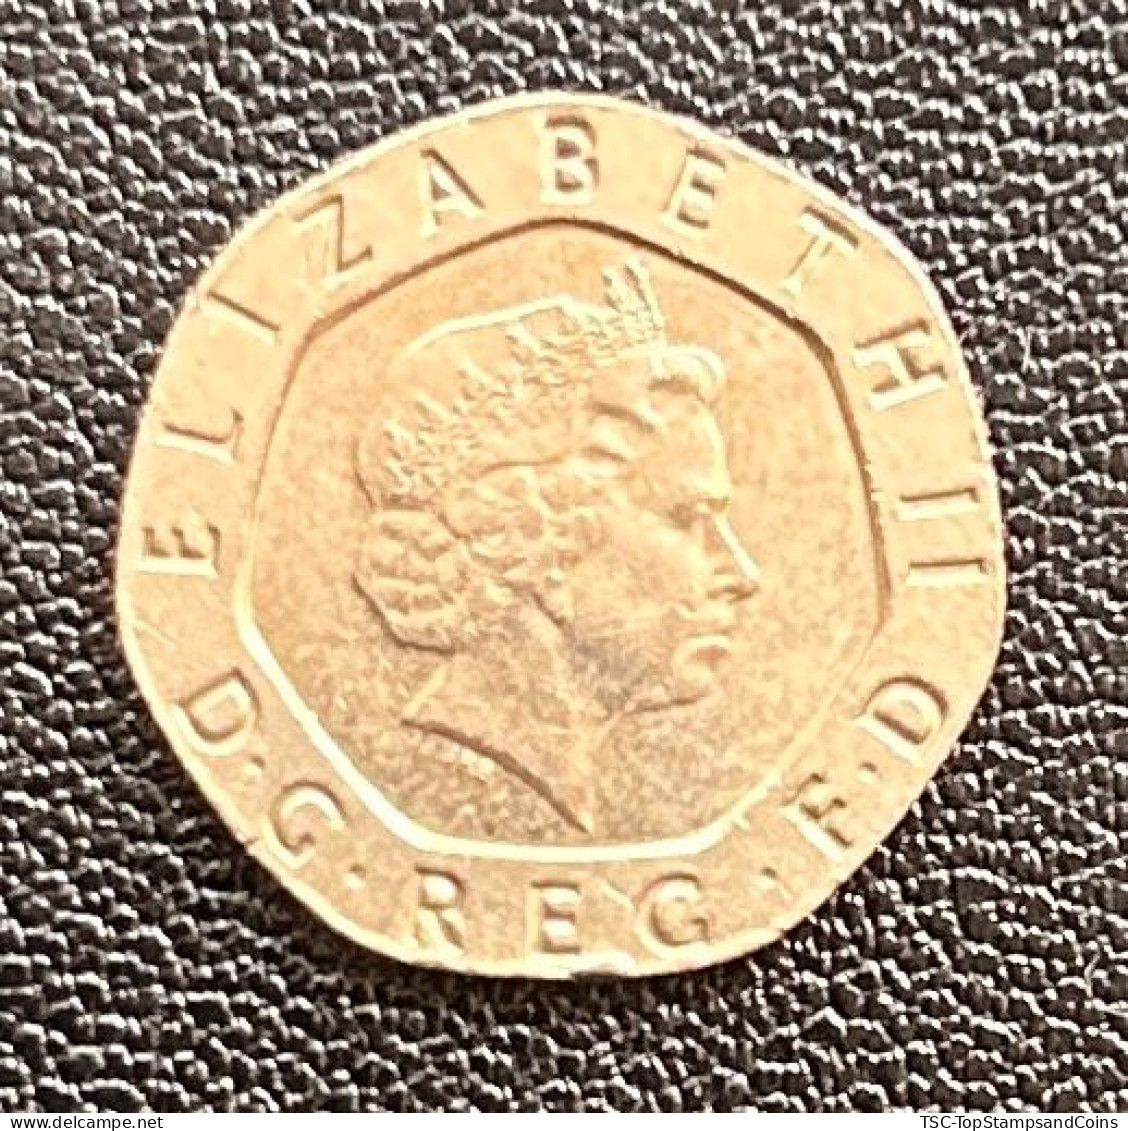 $$GB810 - Queen Elizabeth II - 4th Portrait - Tudor Rose - 20 Pence Coin - Great-Britain - 2005 - 20 Pence